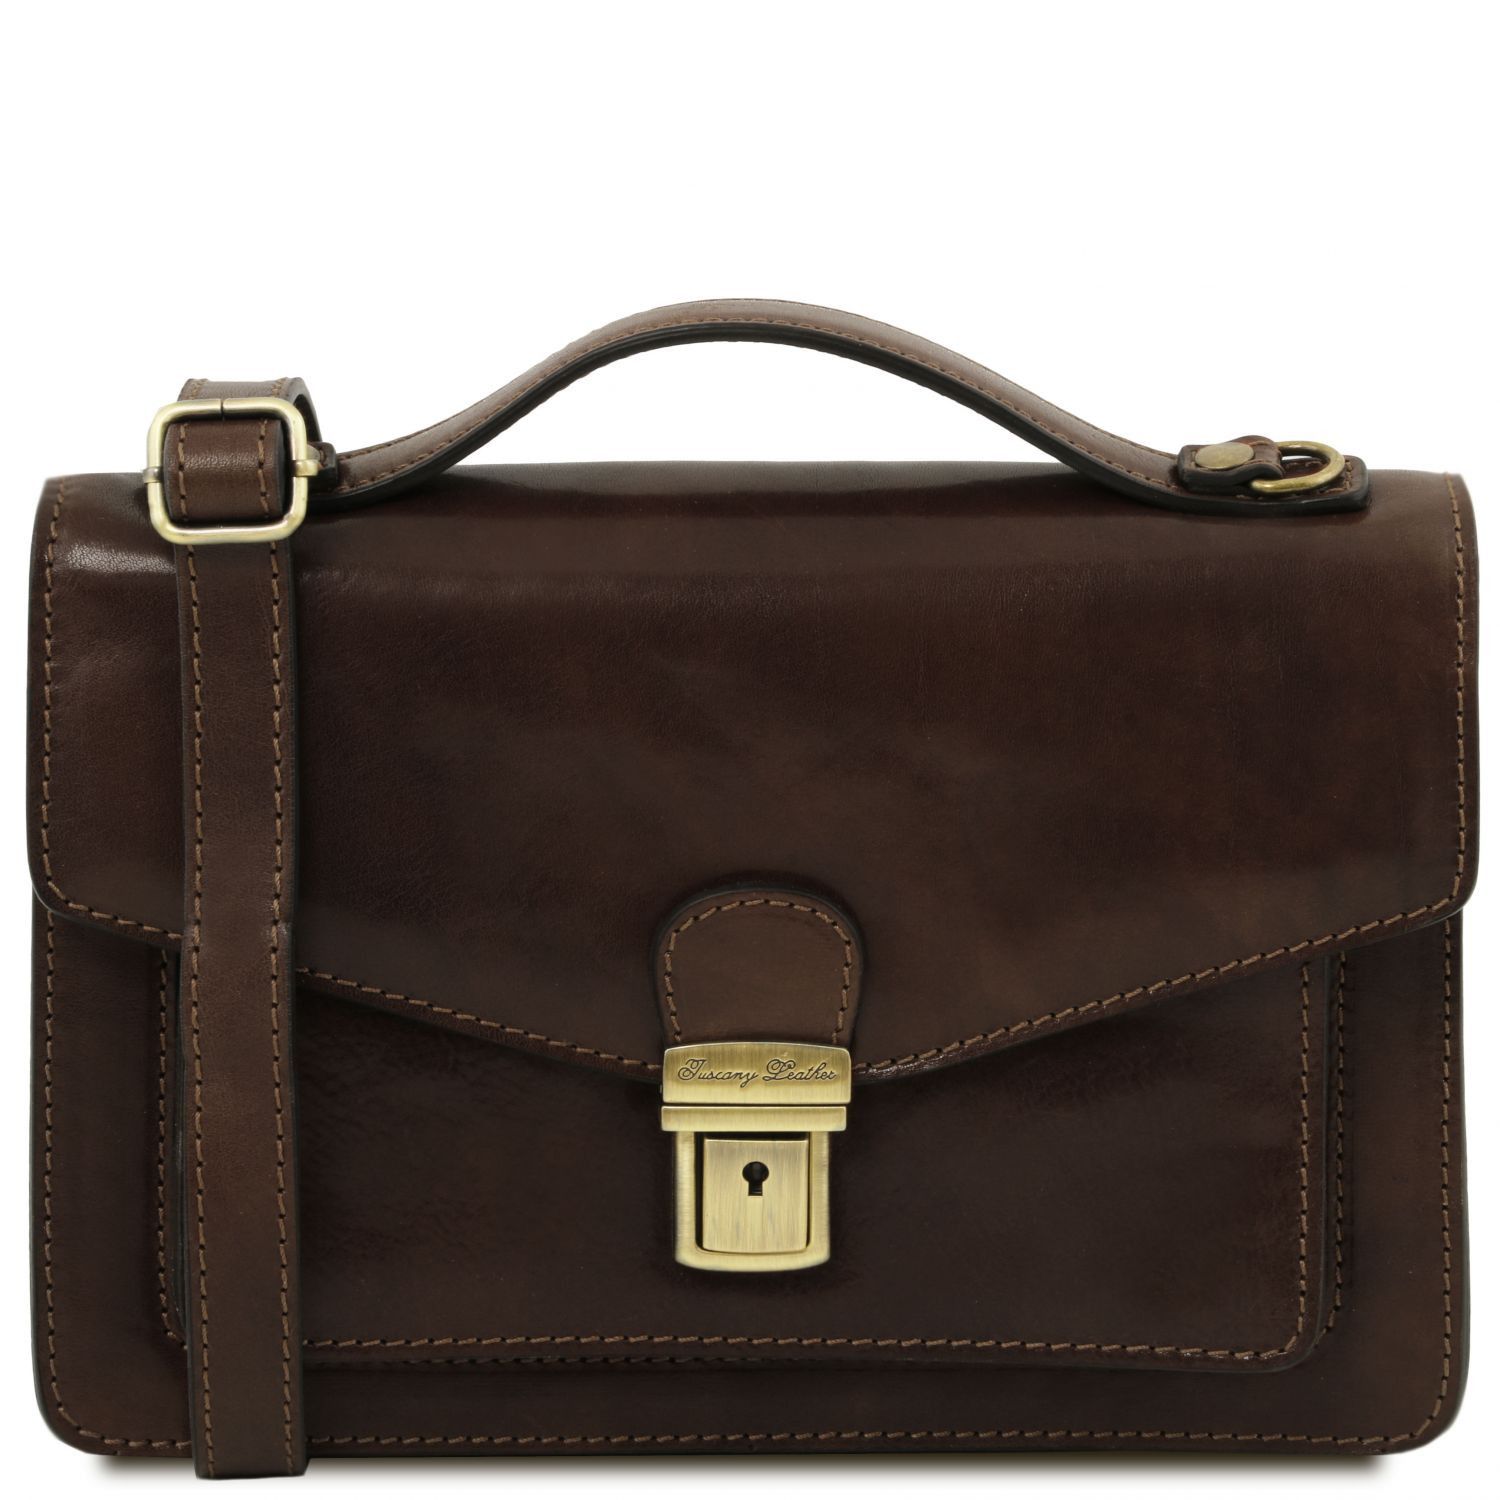 Eric Leather Crossbody Bag Dark Brown TL141443